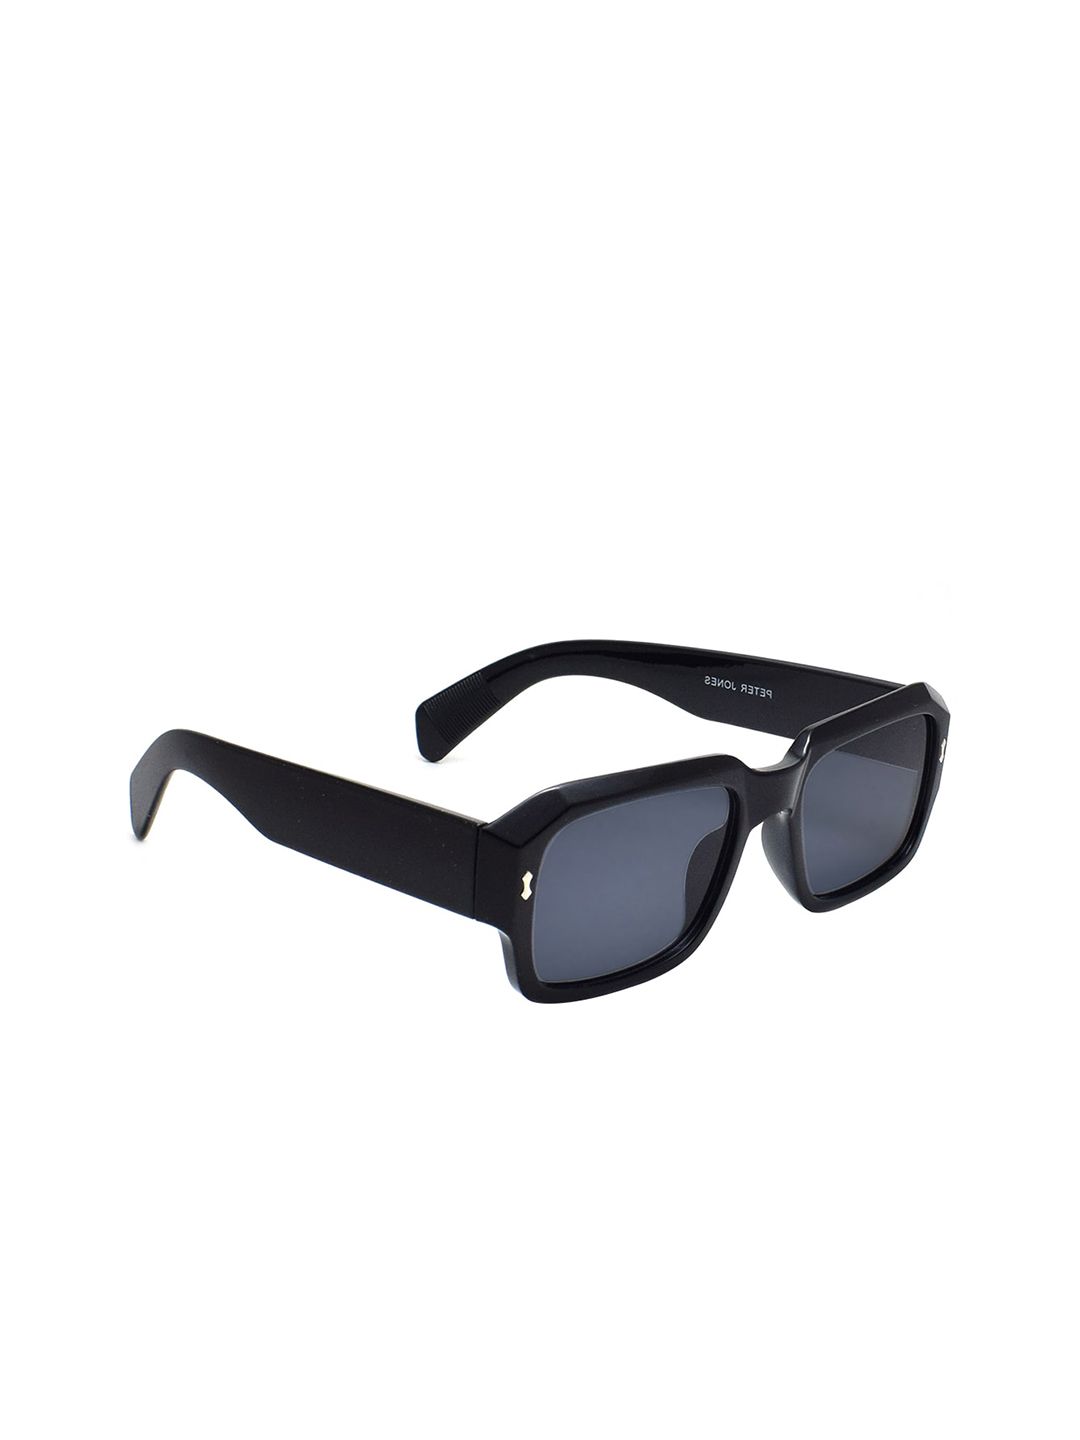 Peter Jones Eyewear Unisex Black Full Rim Square Sunglasses with UV Protected Lens Price in India